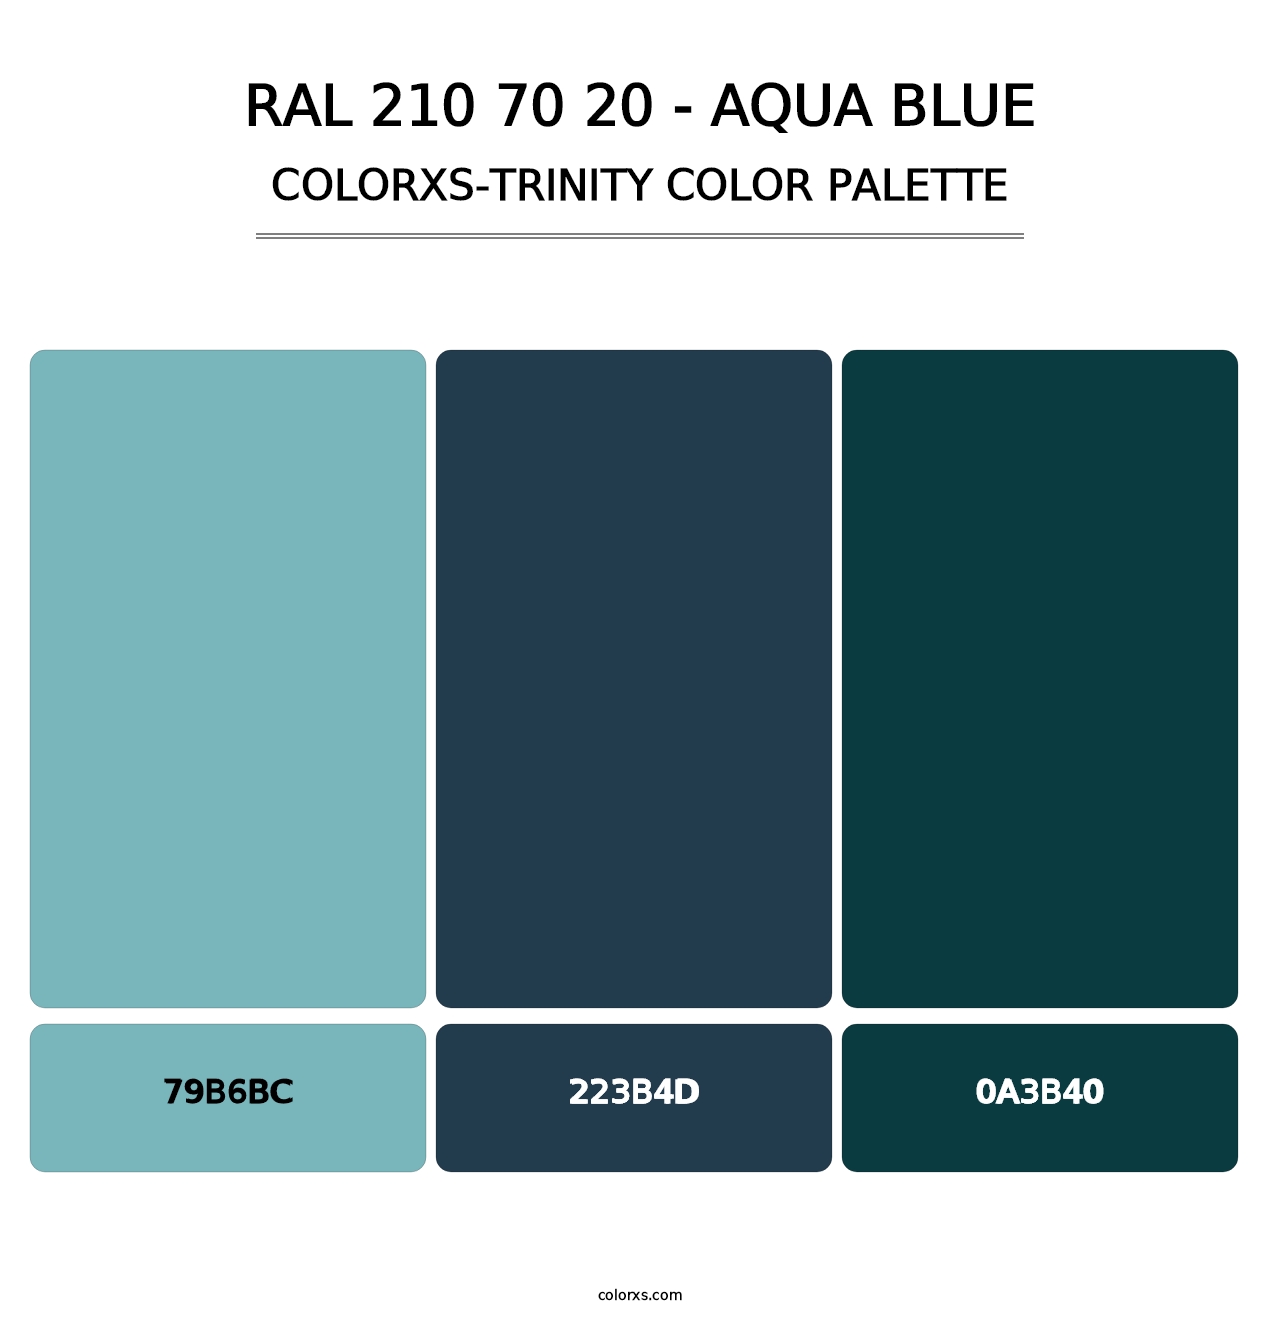 RAL 210 70 20 - Aqua Blue - Colorxs Trinity Palette